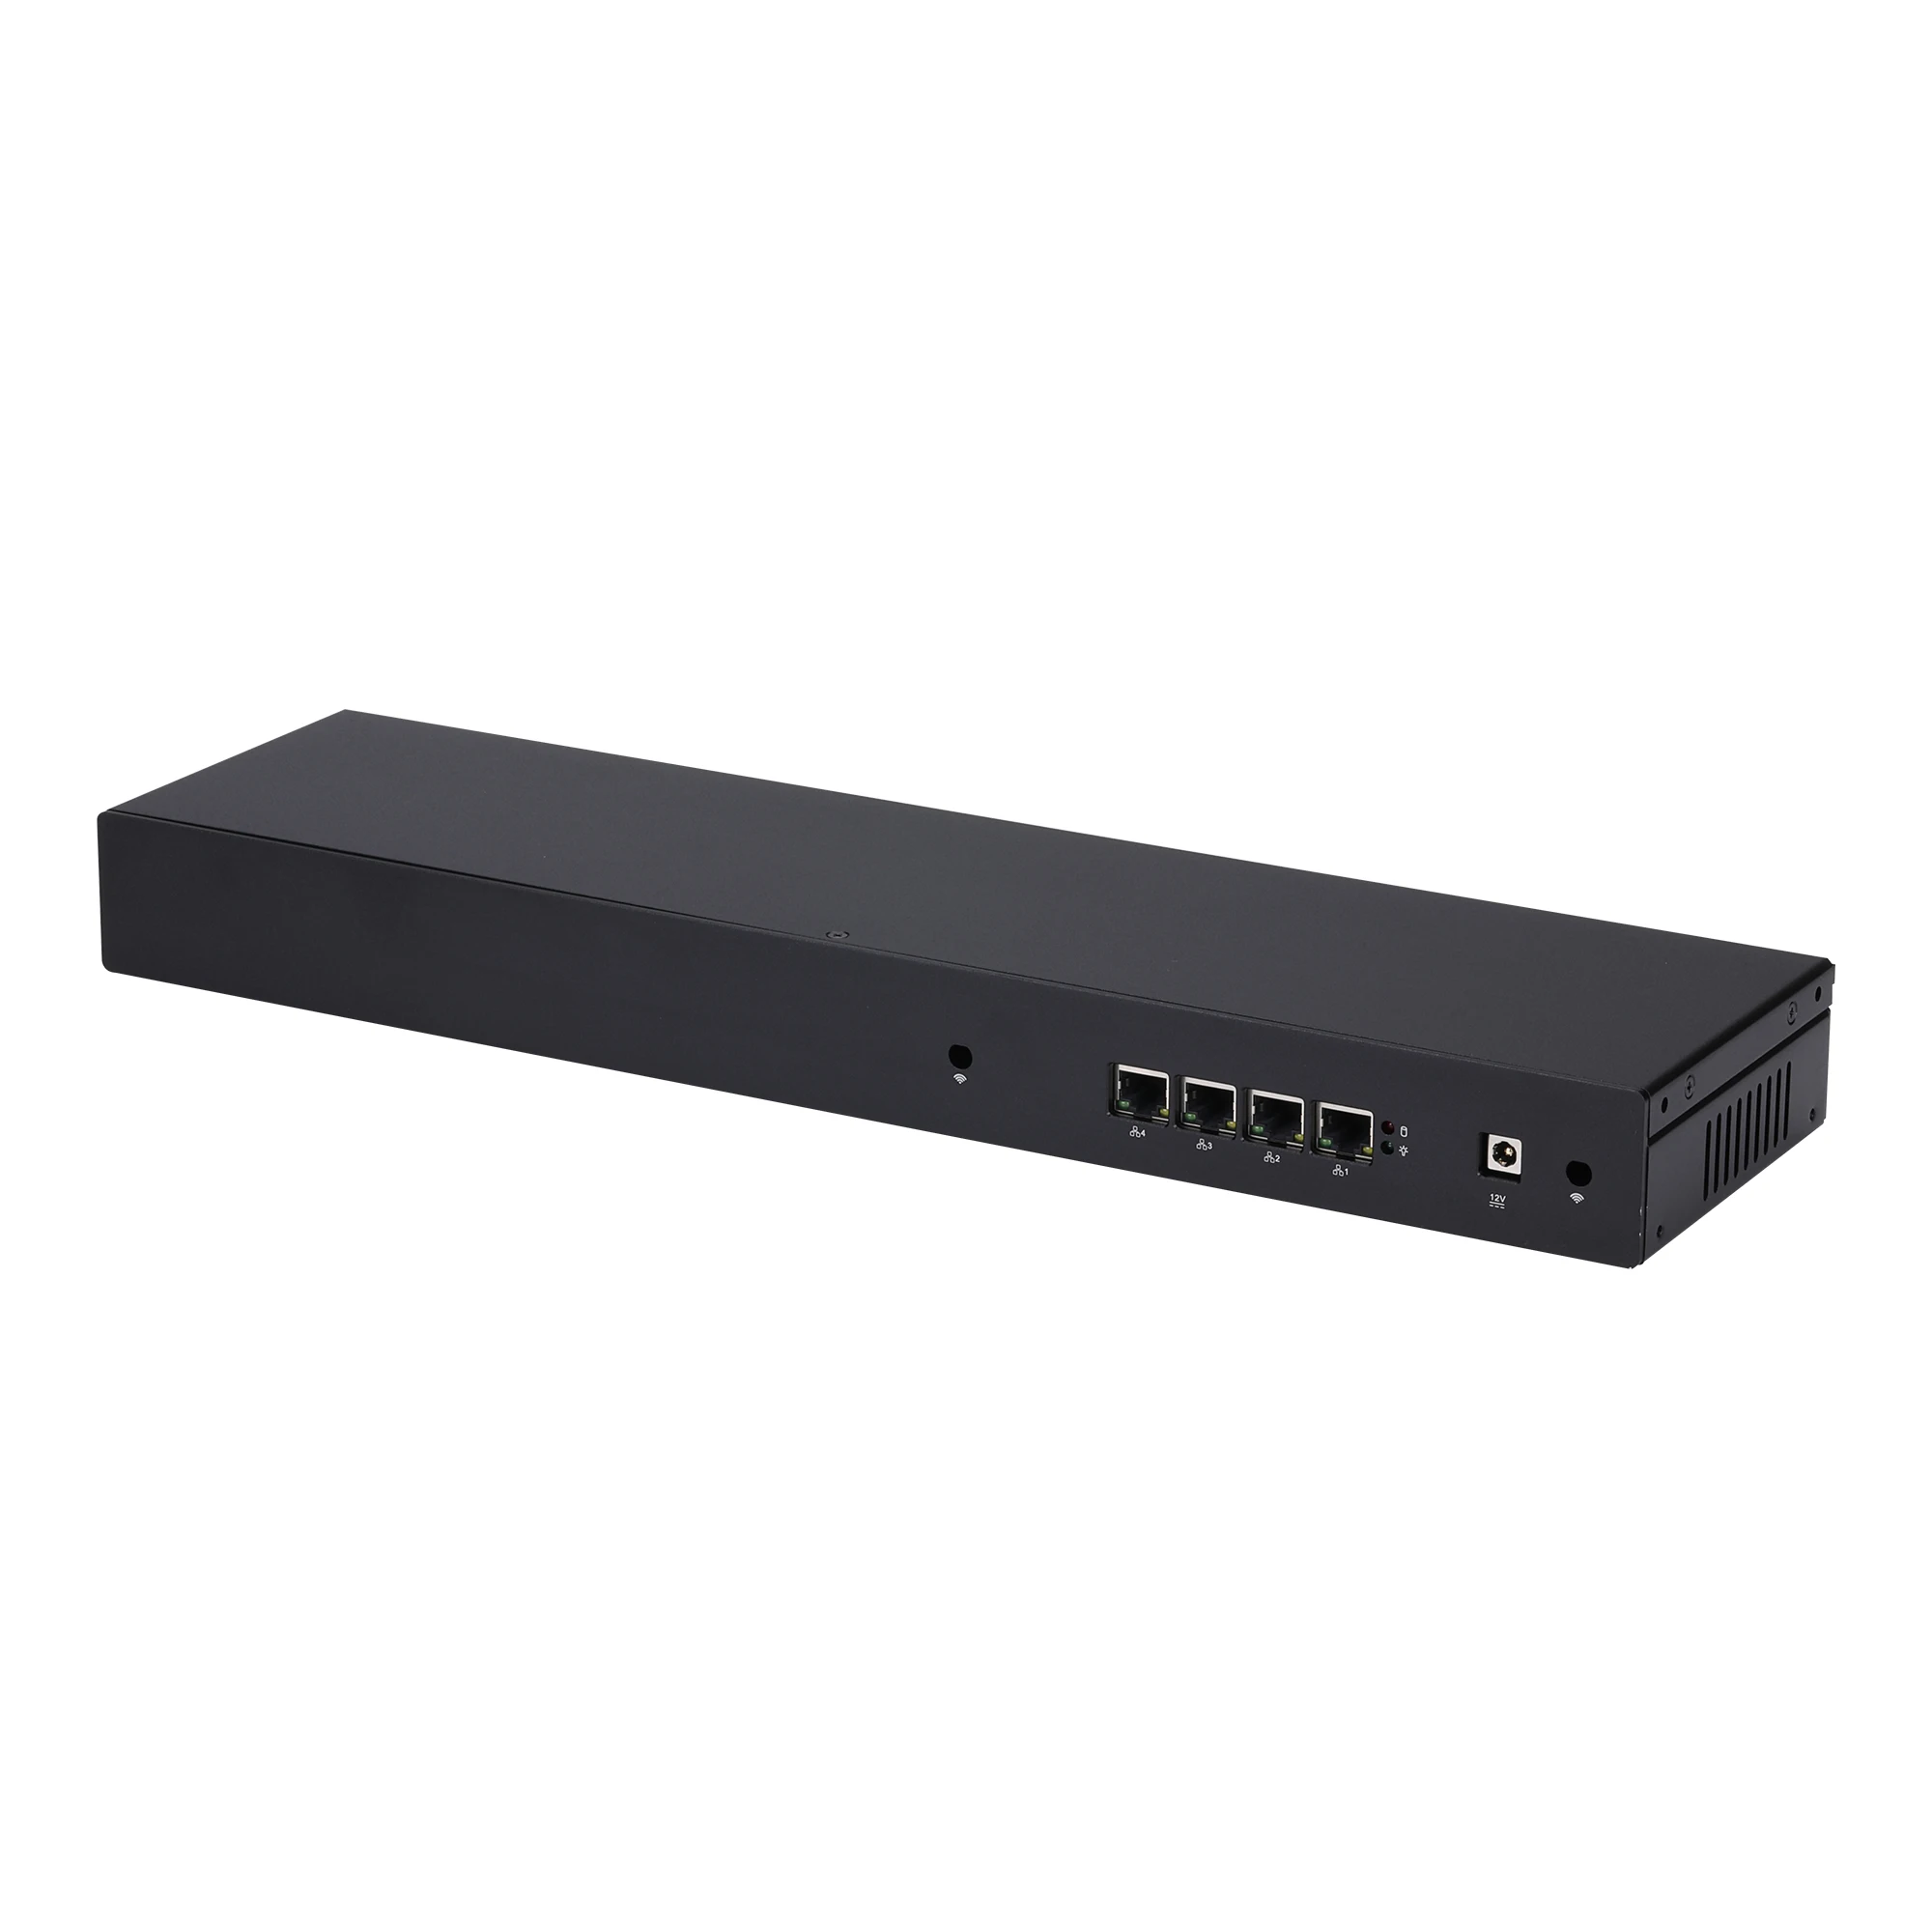 QOTOM 4 LAN Port 1U Rack Micro Appliance Router Firewall Q335G4 - Core i3 5005U